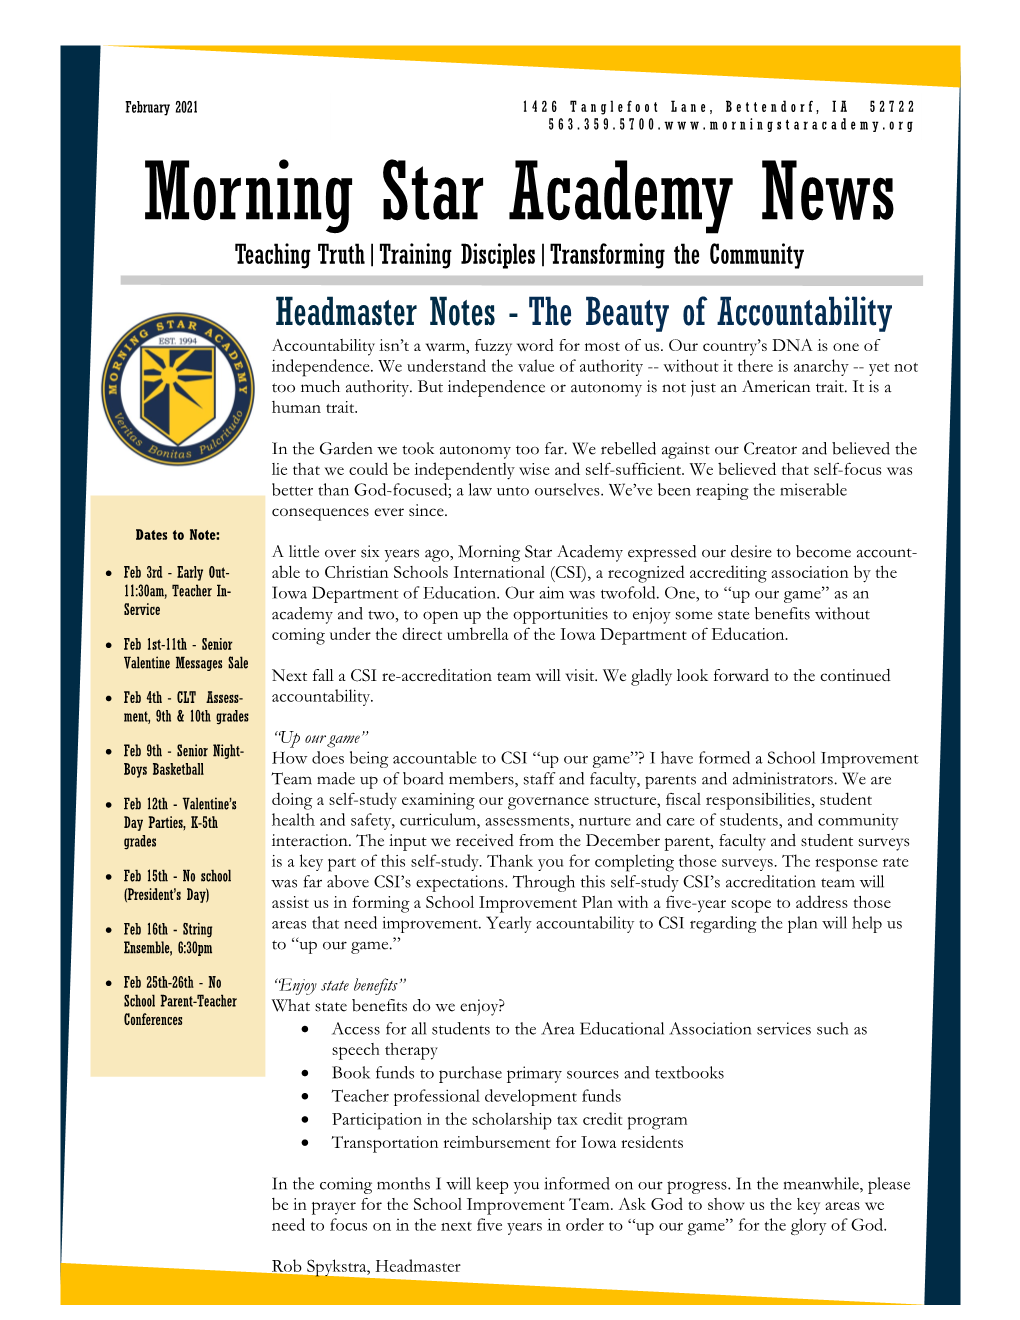 Morning Star Academy News